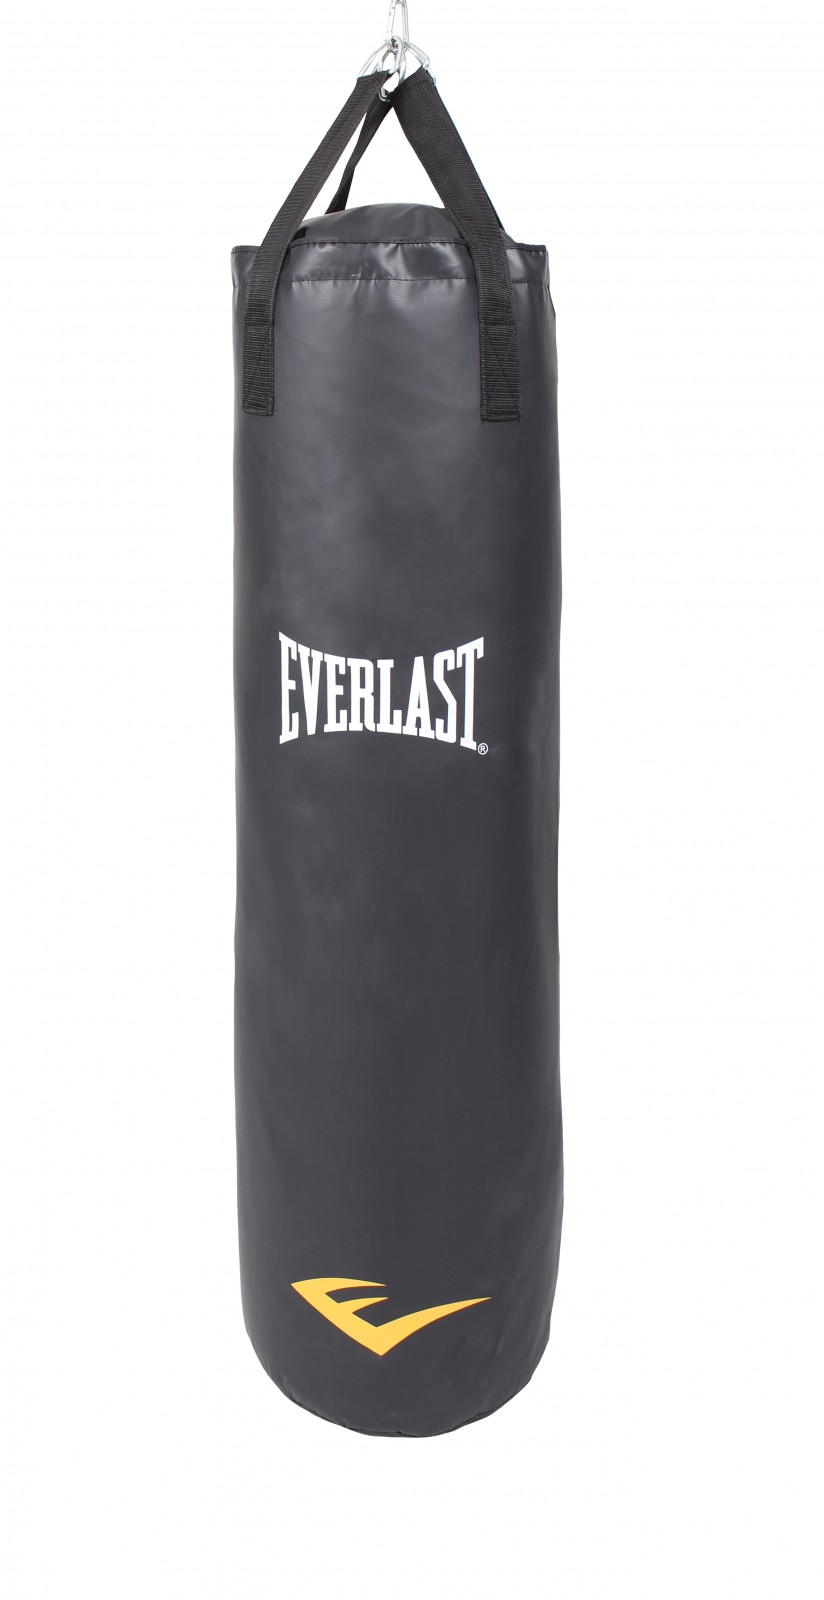 Everlast punching bag Powerstrike 84 - Sport-Tiedje